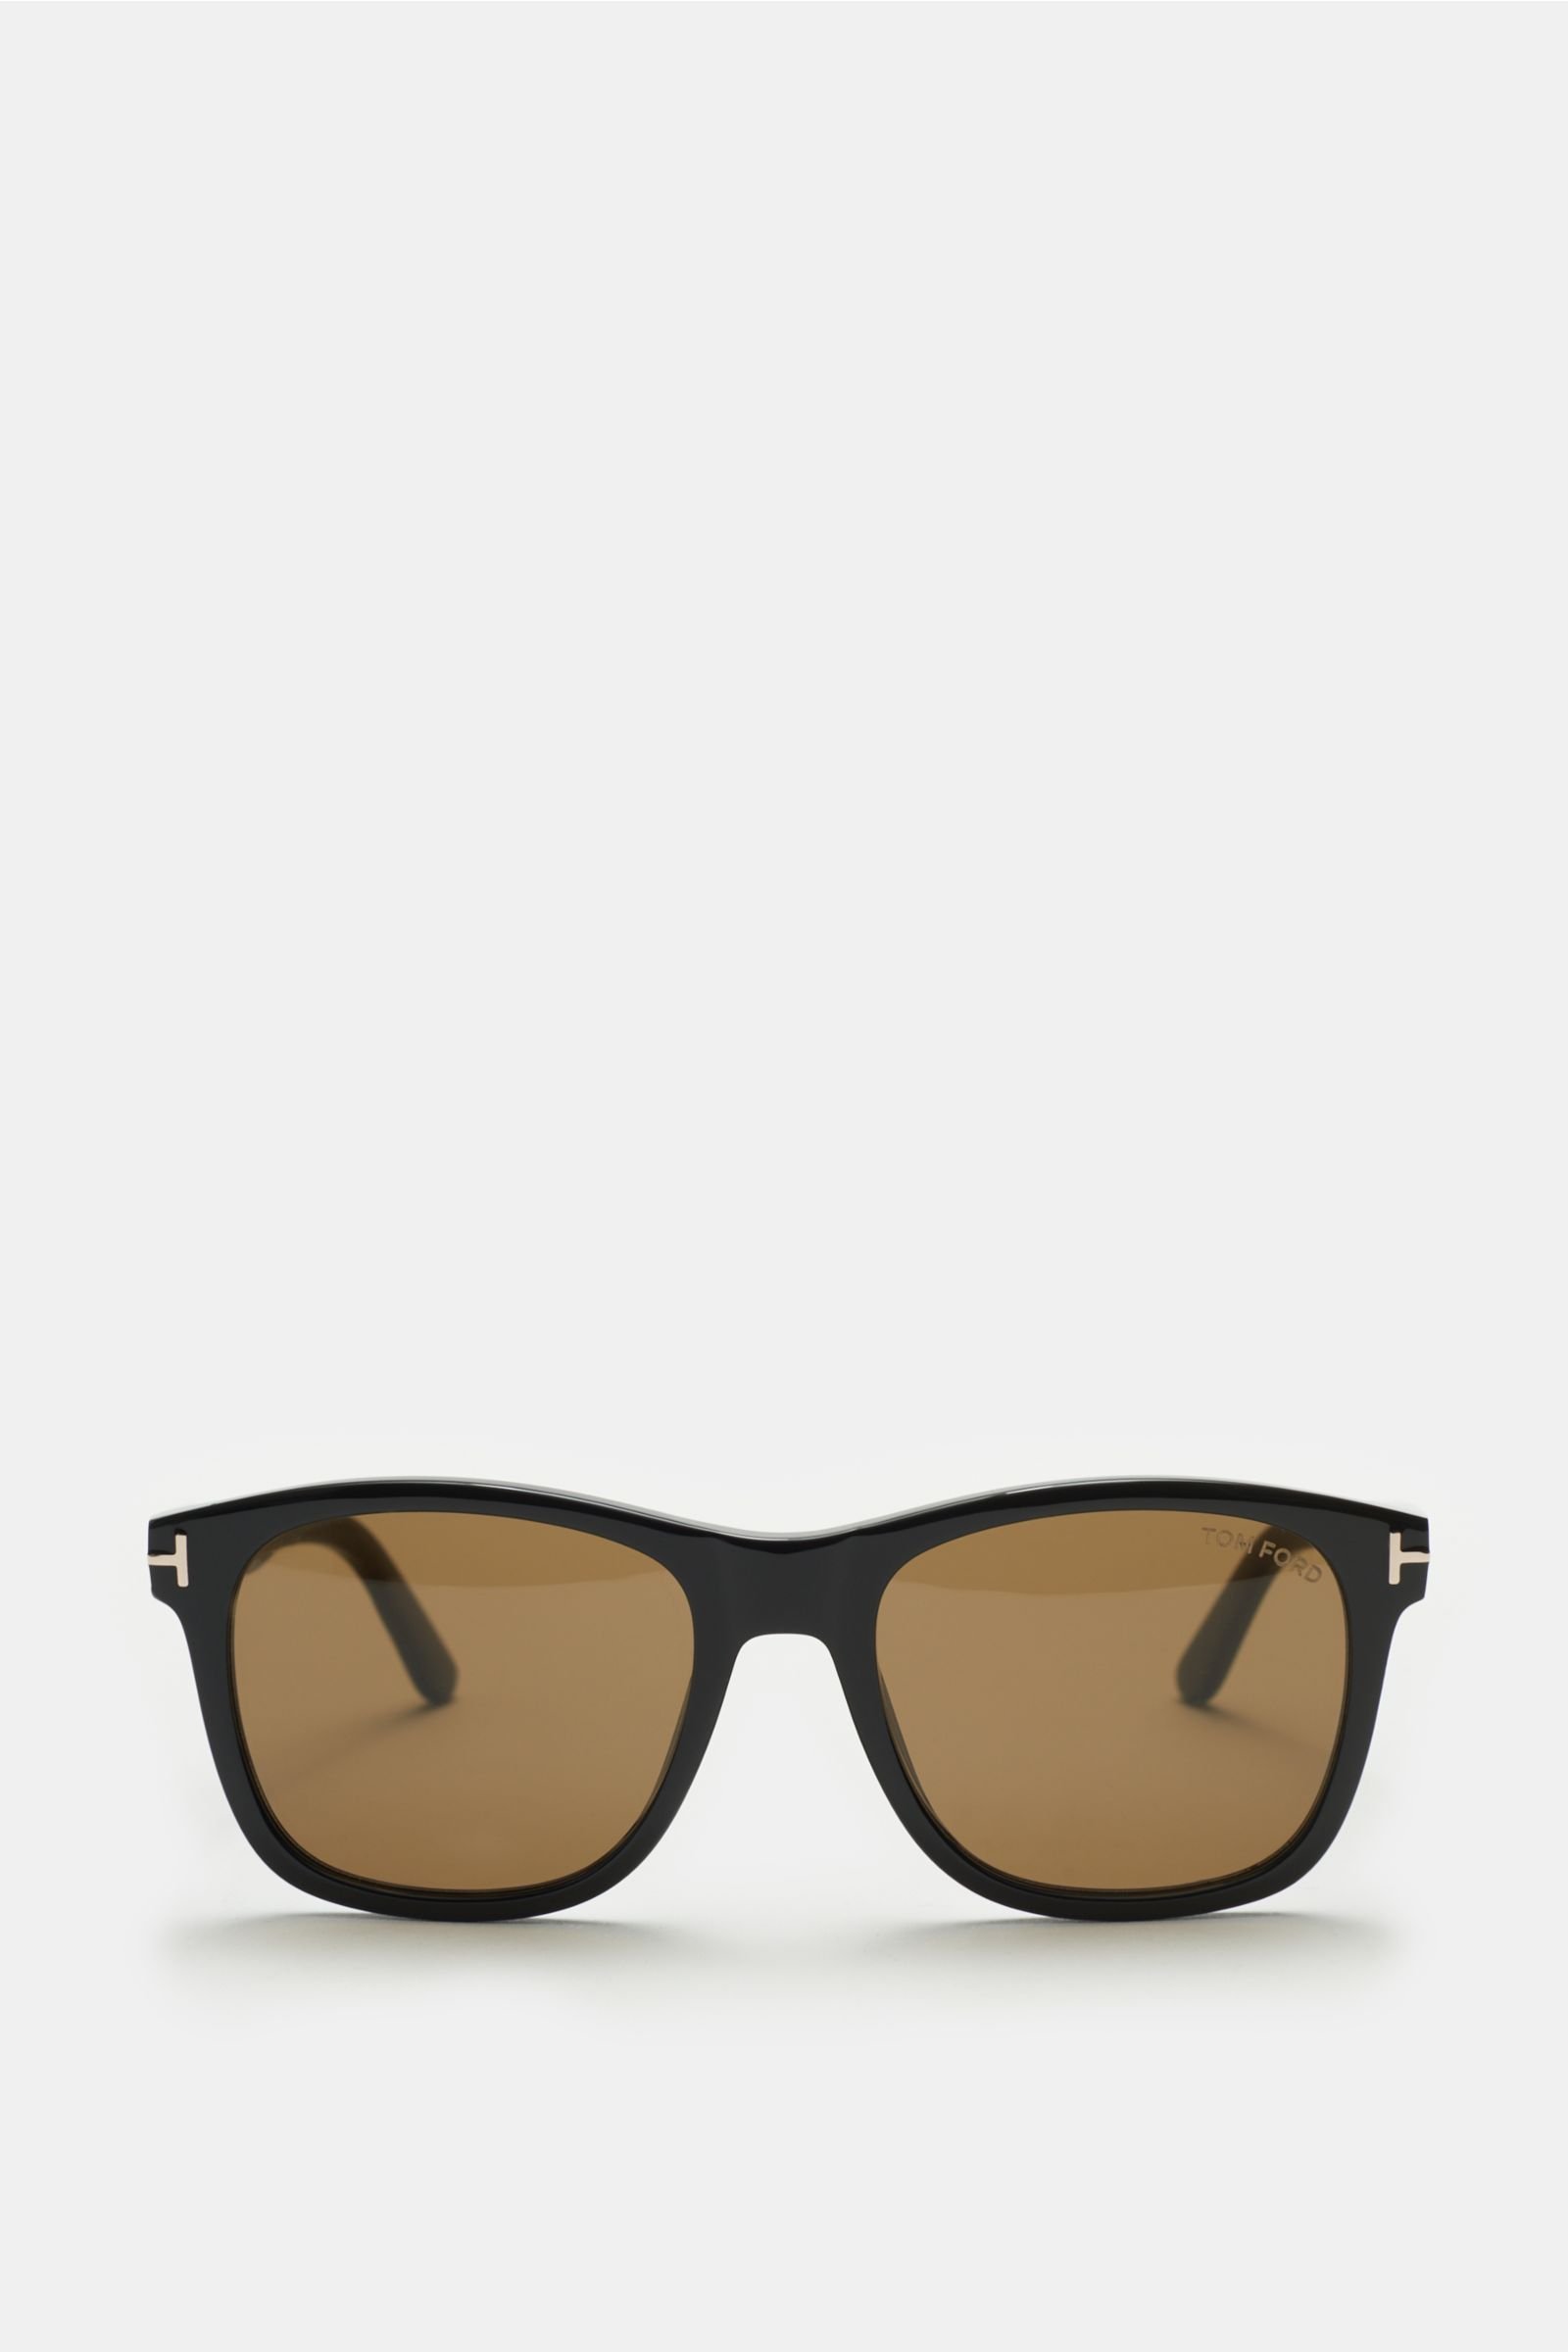 Sunglasses 'Eric' black/brown